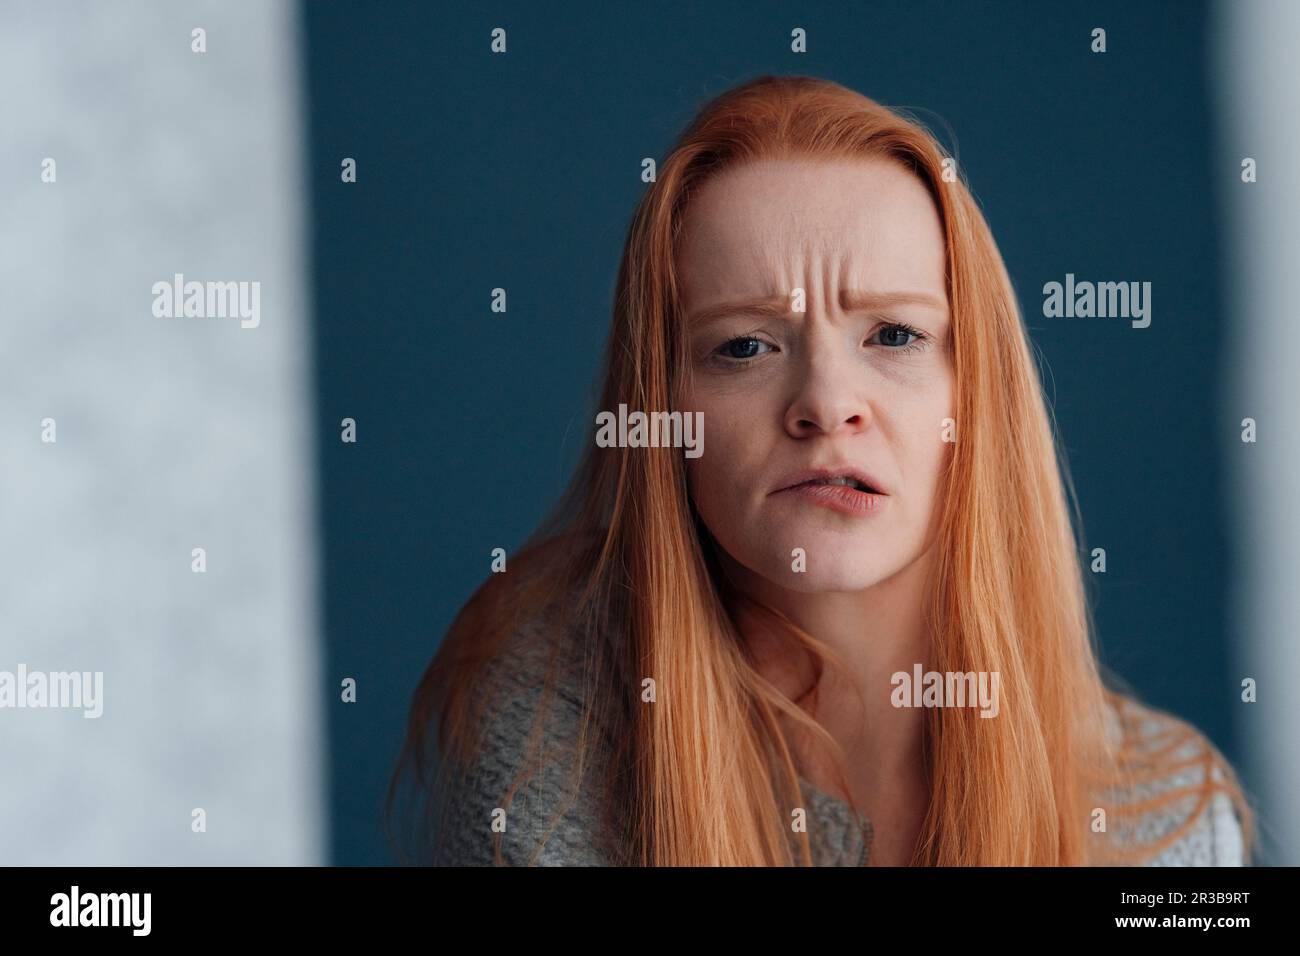 Redhead woman making facial expression Stock Photo